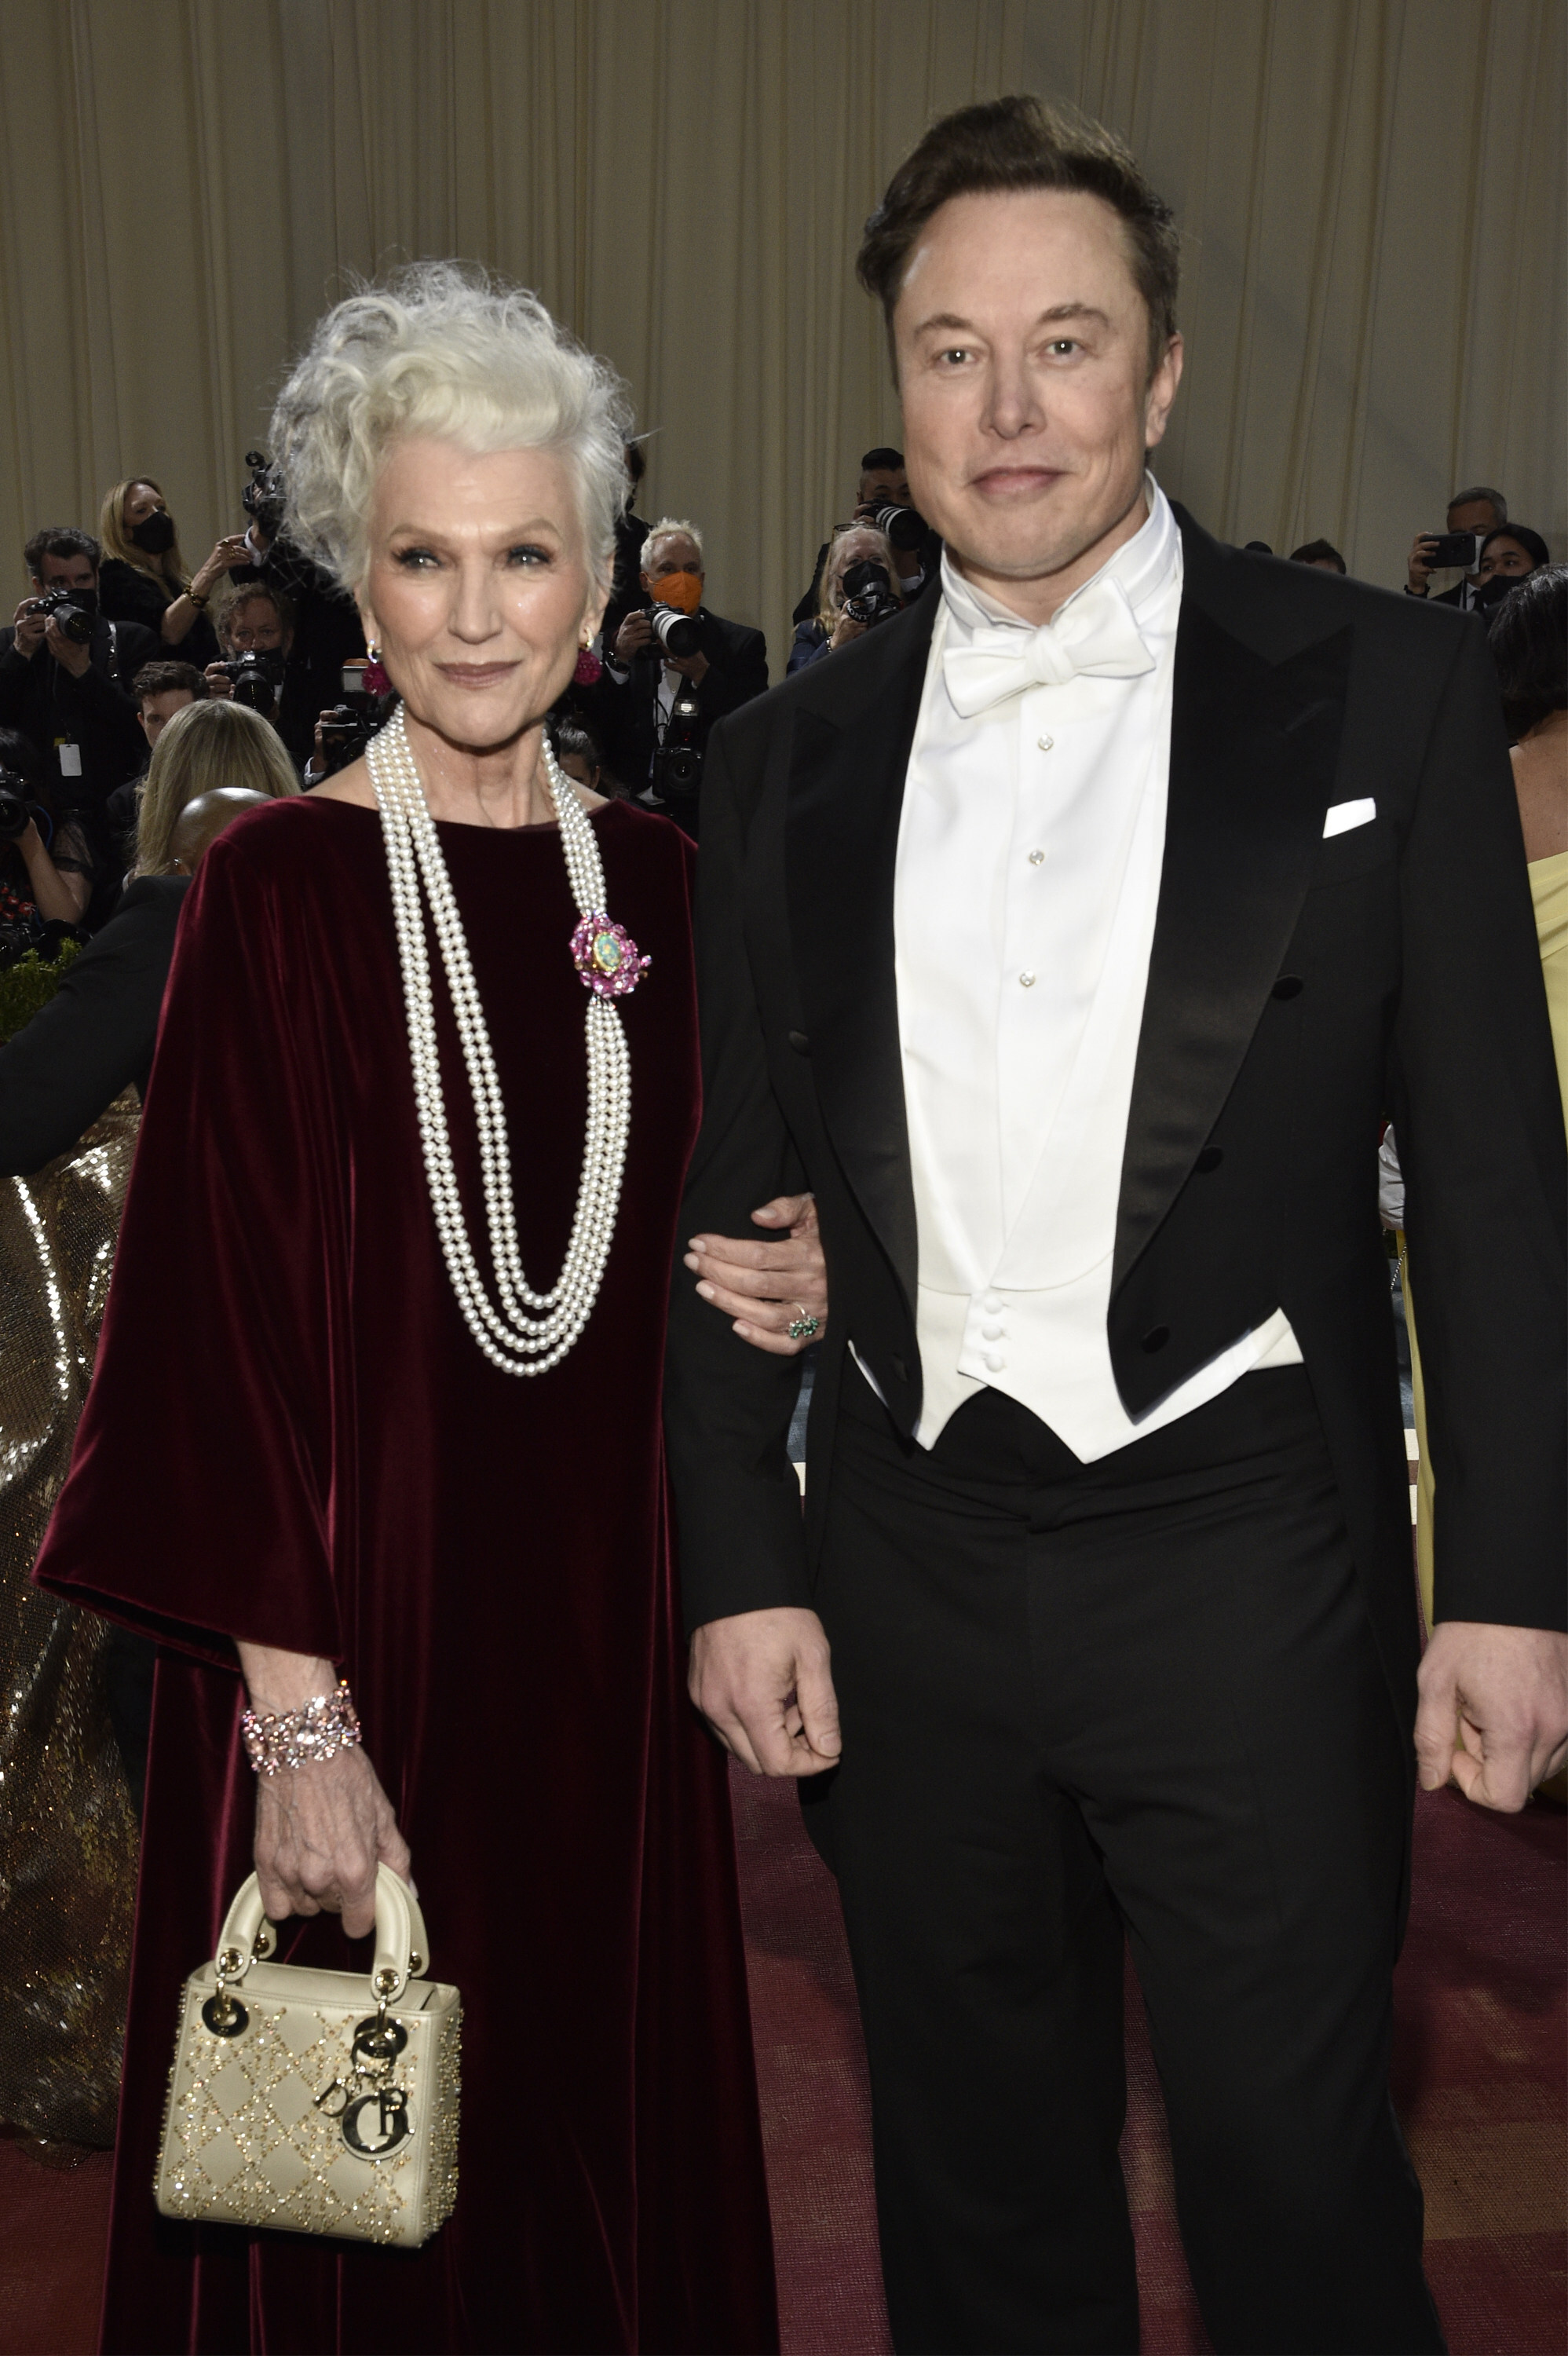 Maye Musk attends the Met Gala with billionaire son Elon Musk. Photo: AP